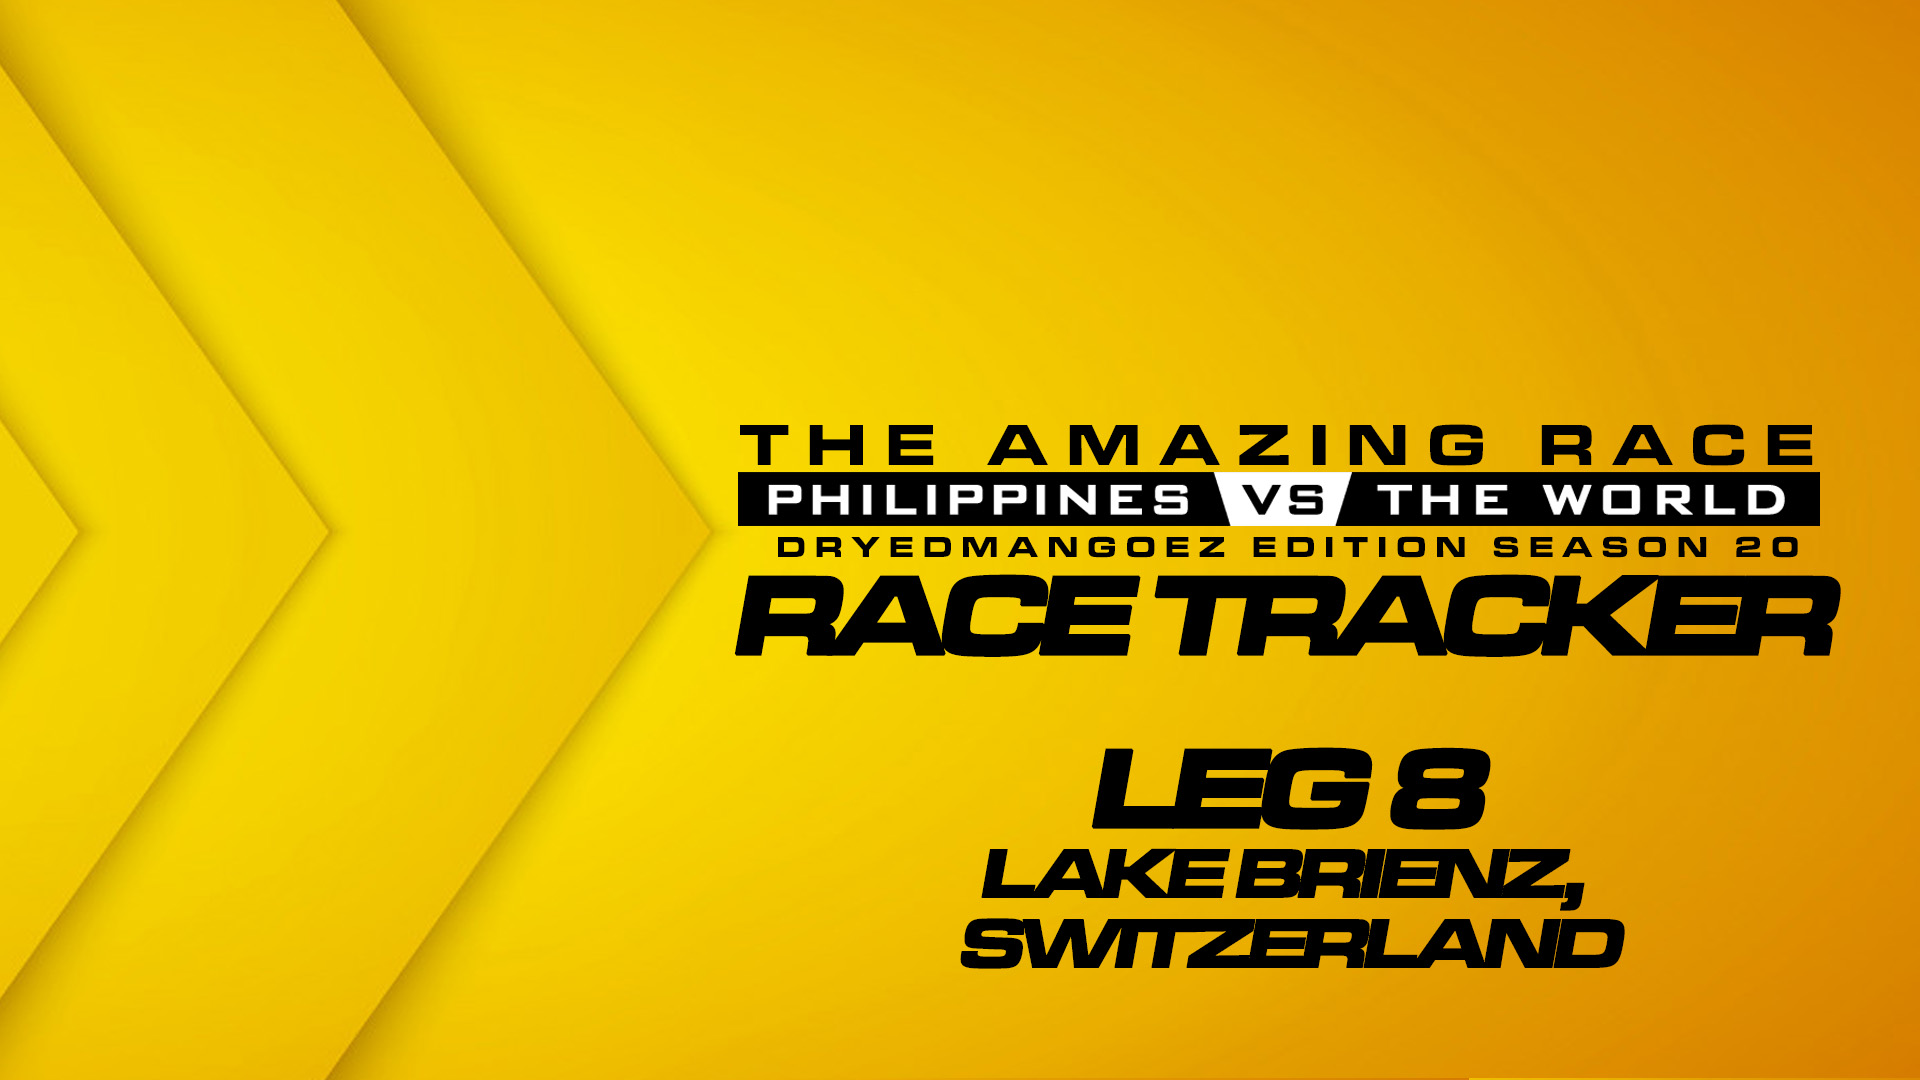 The Amazing Race Philippines vs The World (DryedMangoez Edition Season 20) Race Tracker – Leg 8